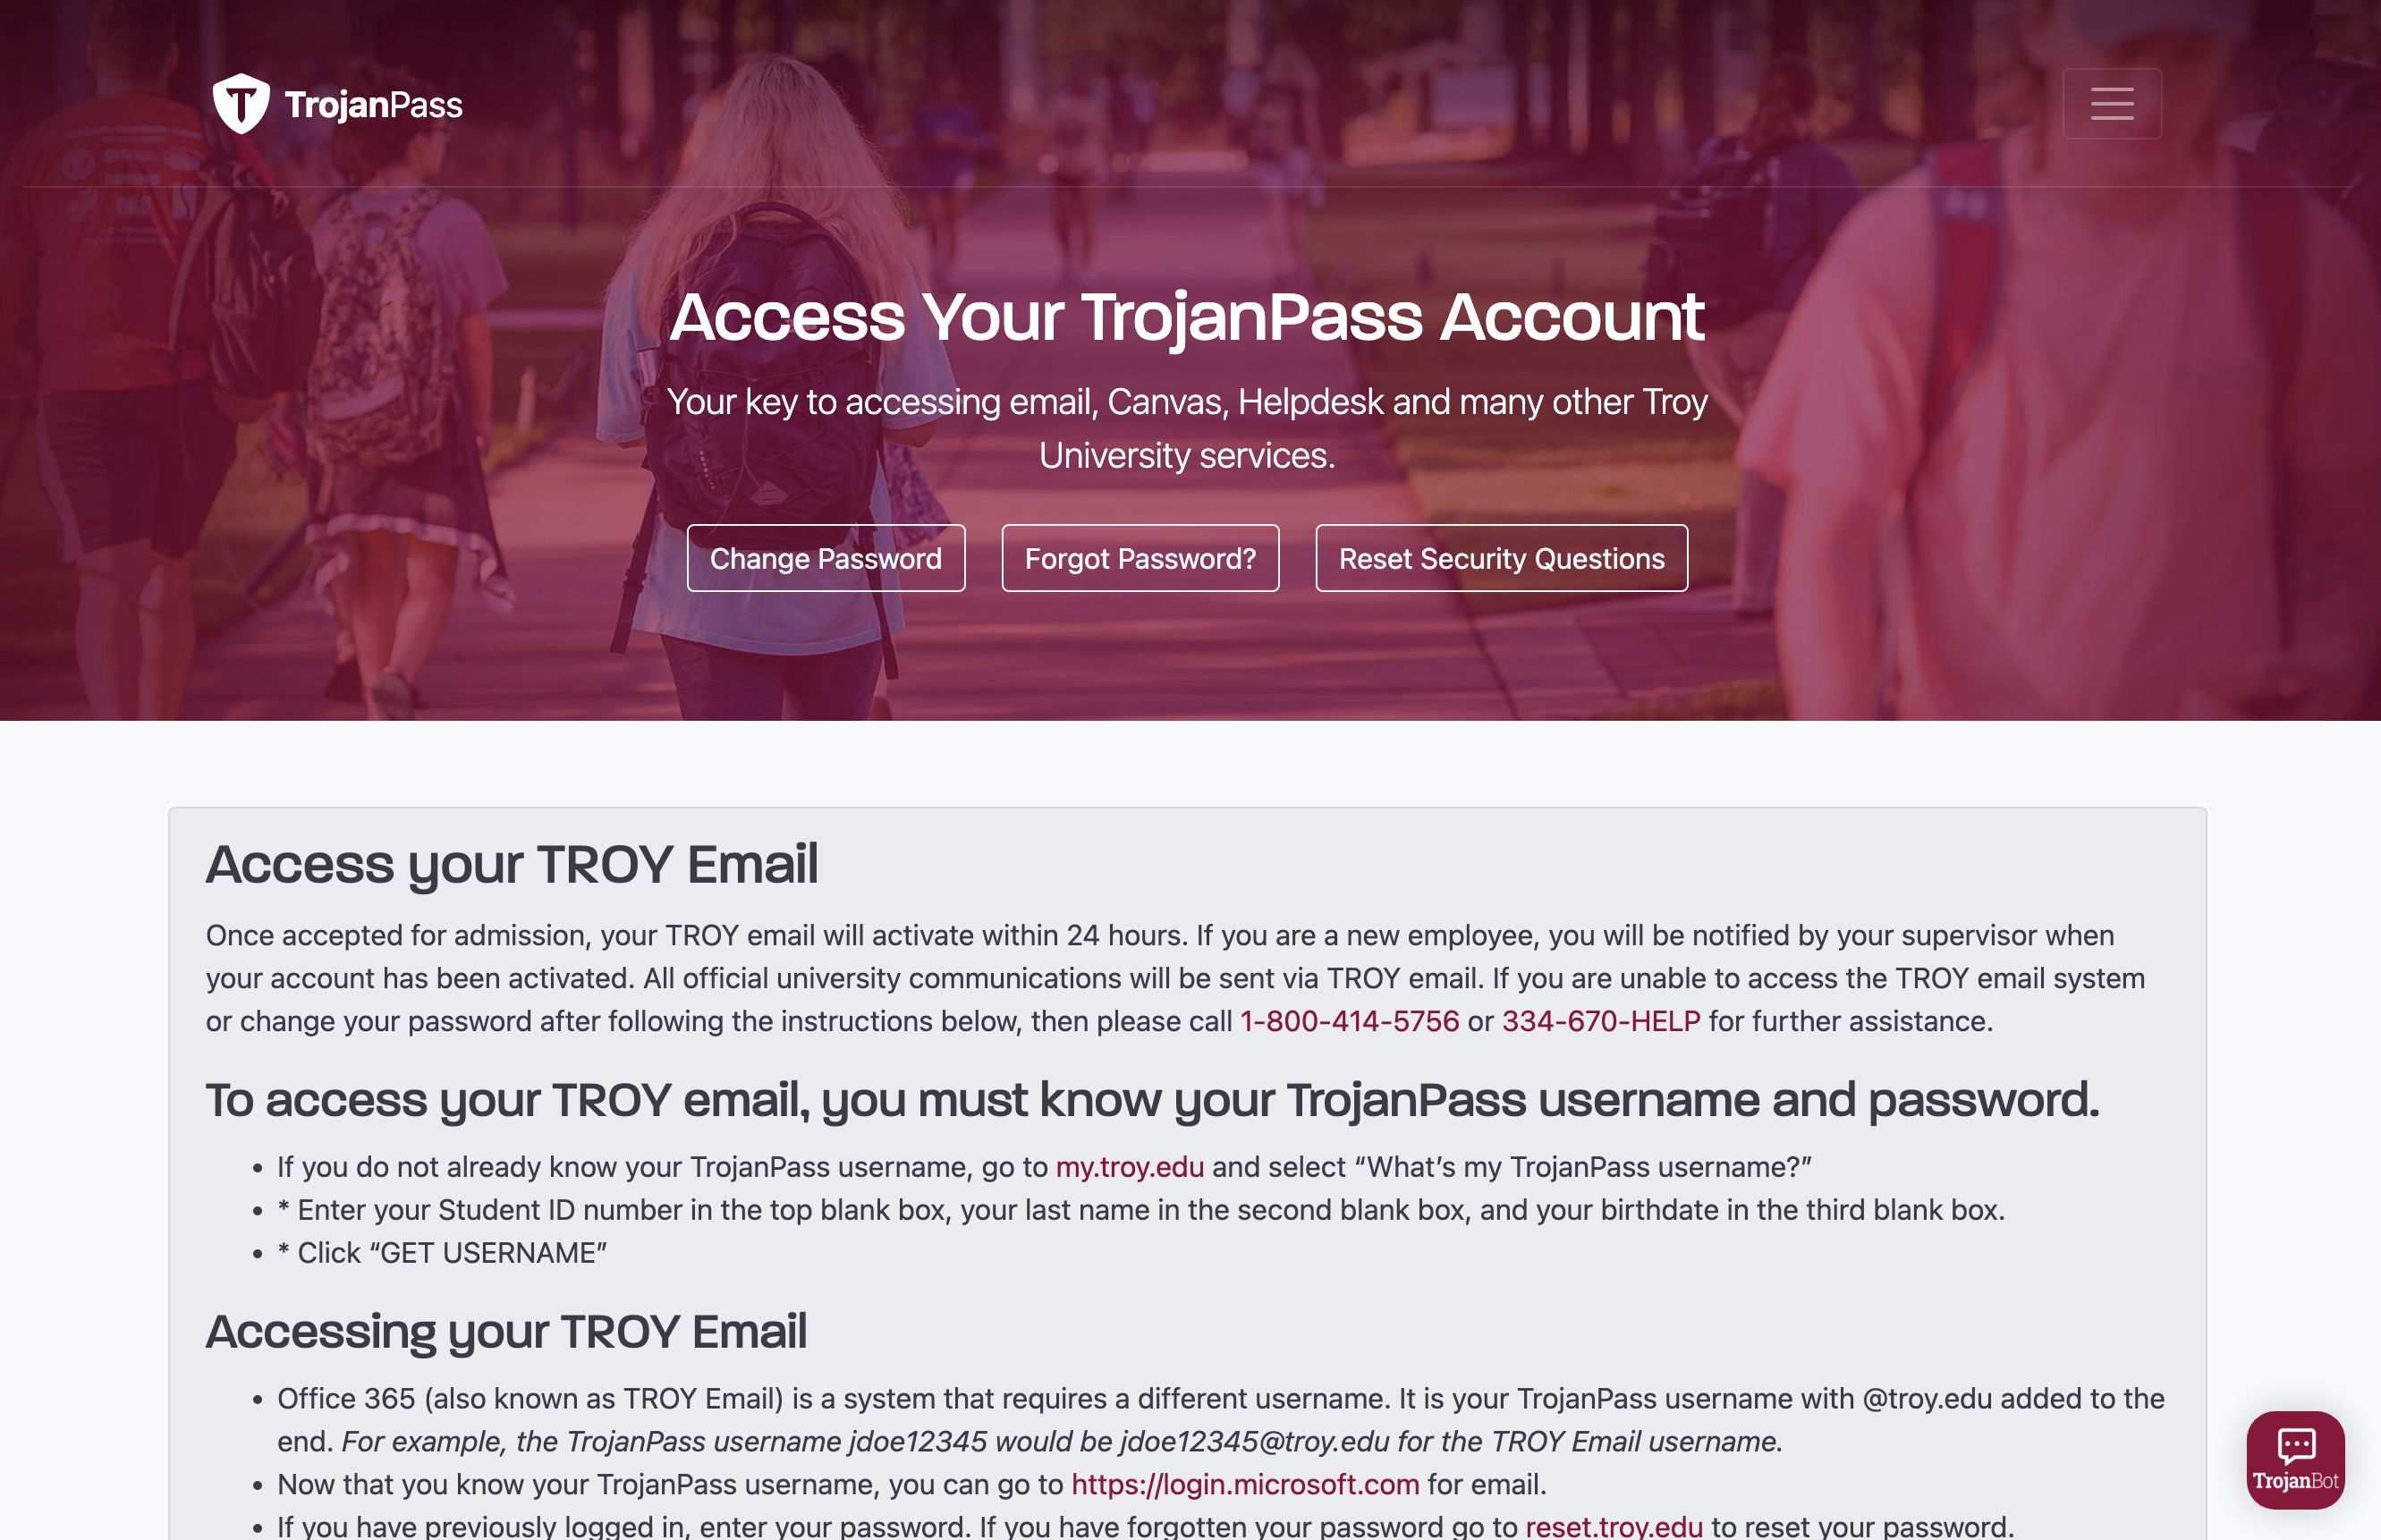 TrojanPass Account Screen